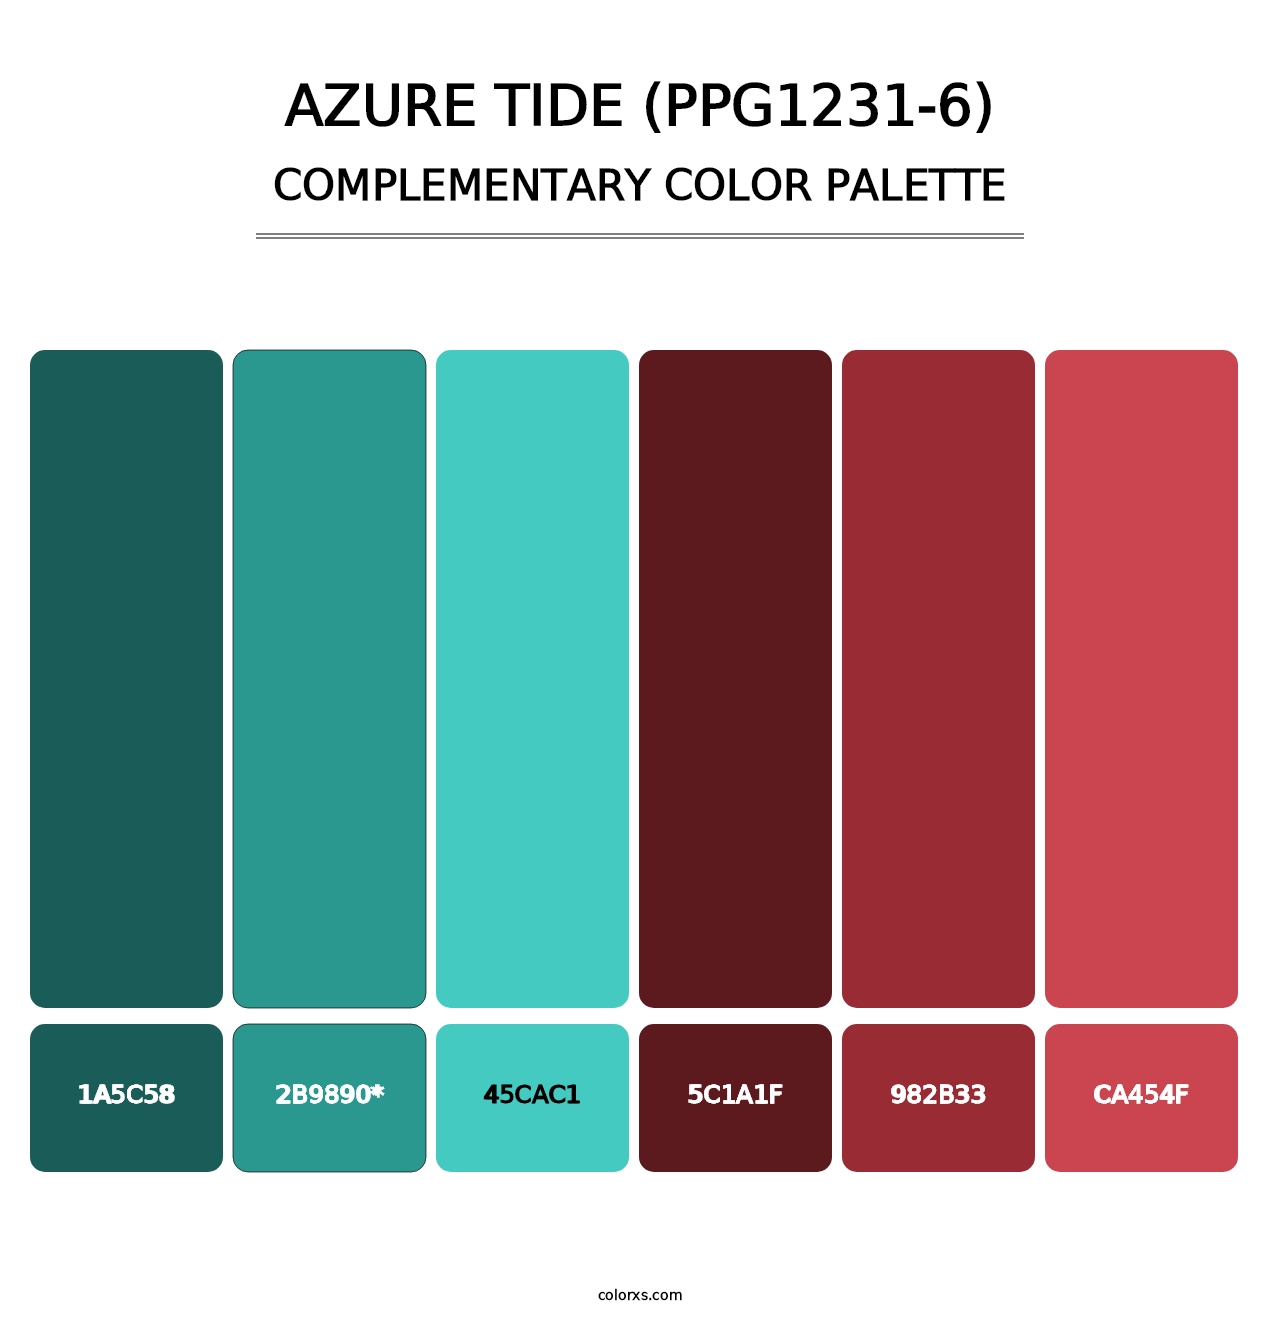 Azure Tide (PPG1231-6) - Complementary Color Palette